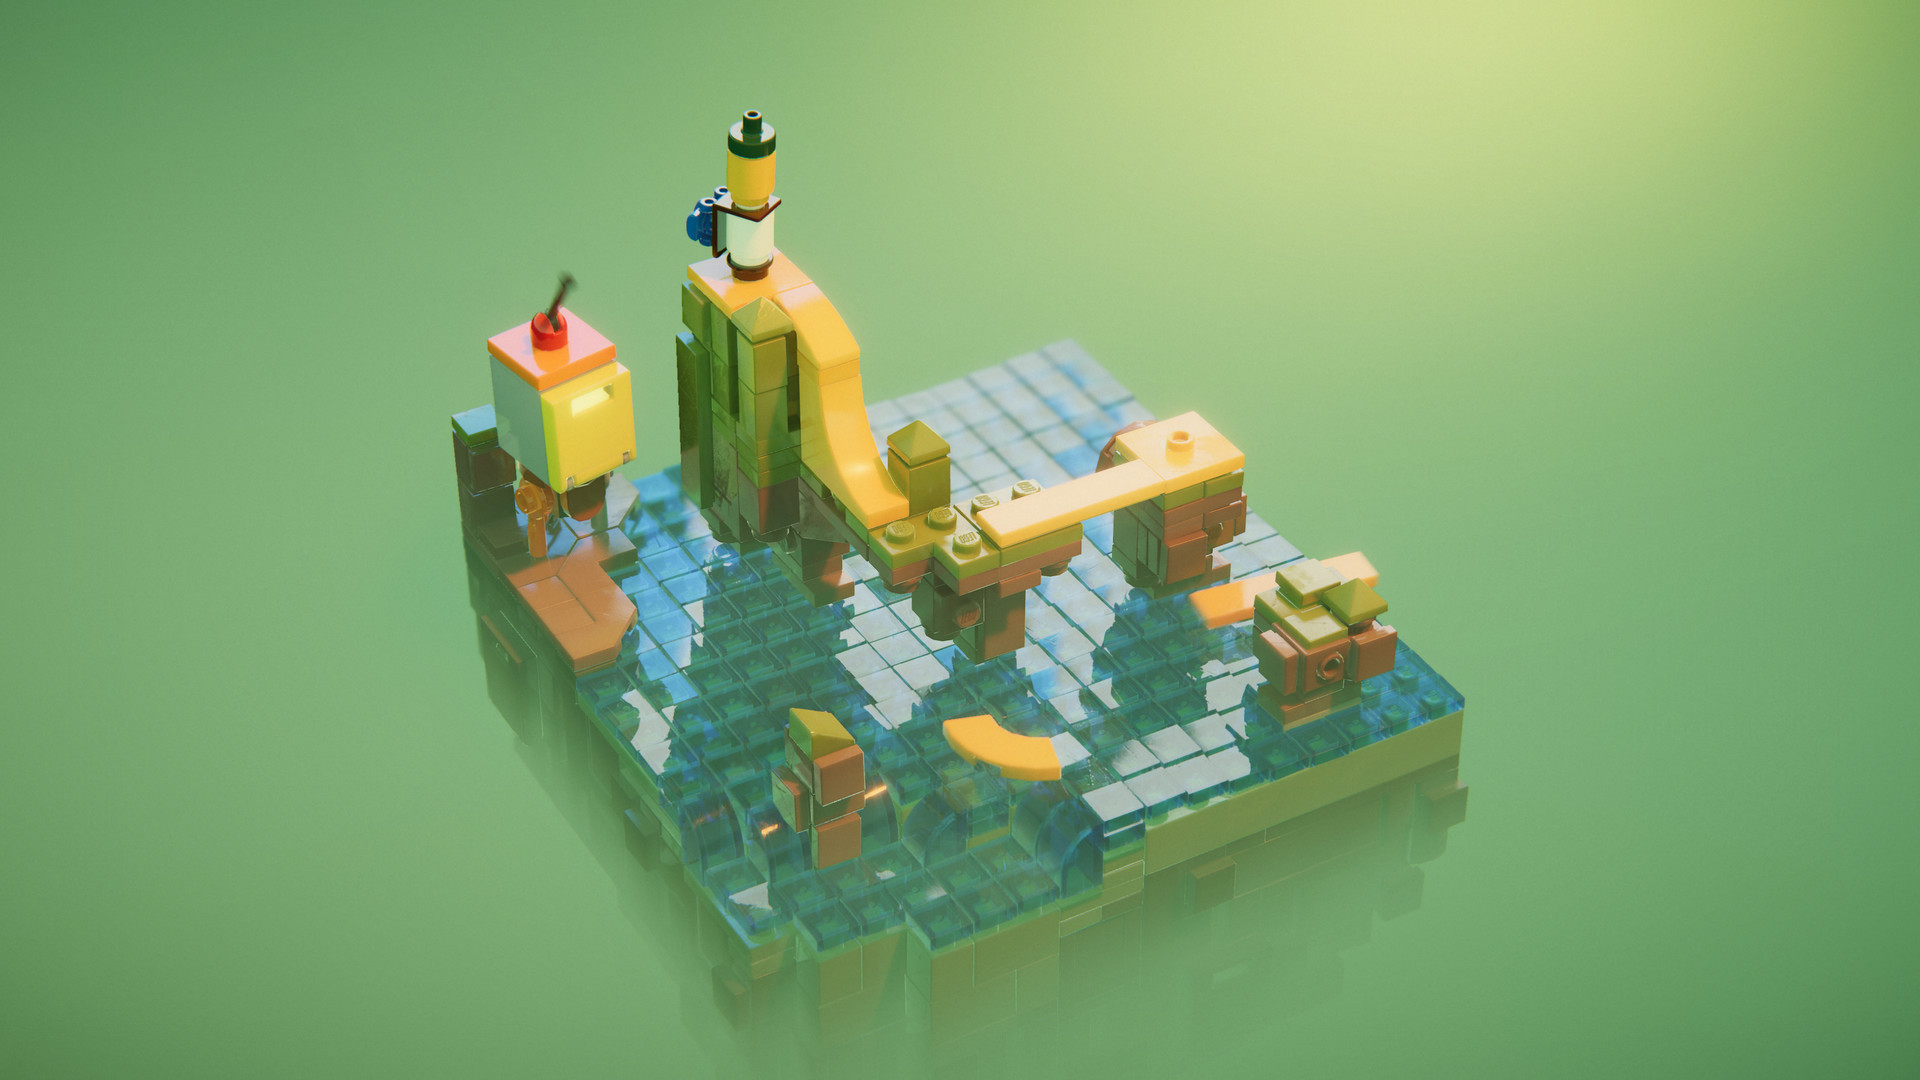 《LEGO建造者之旅》6月22日登陸Switch和Steam平台 支持N卡光追